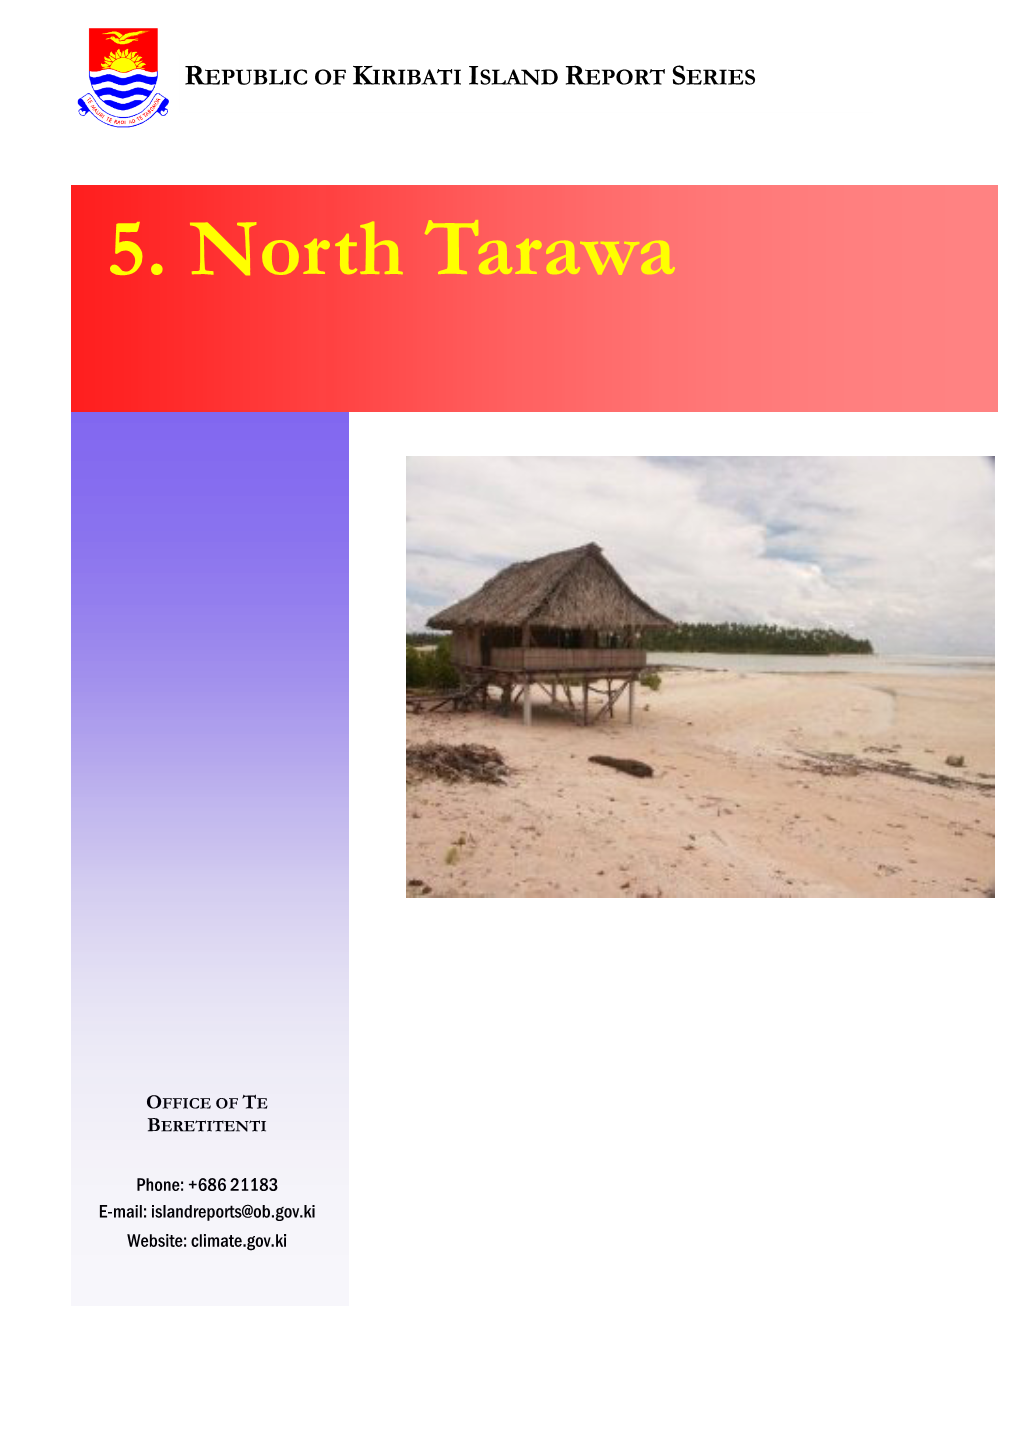 5. North Tarawa